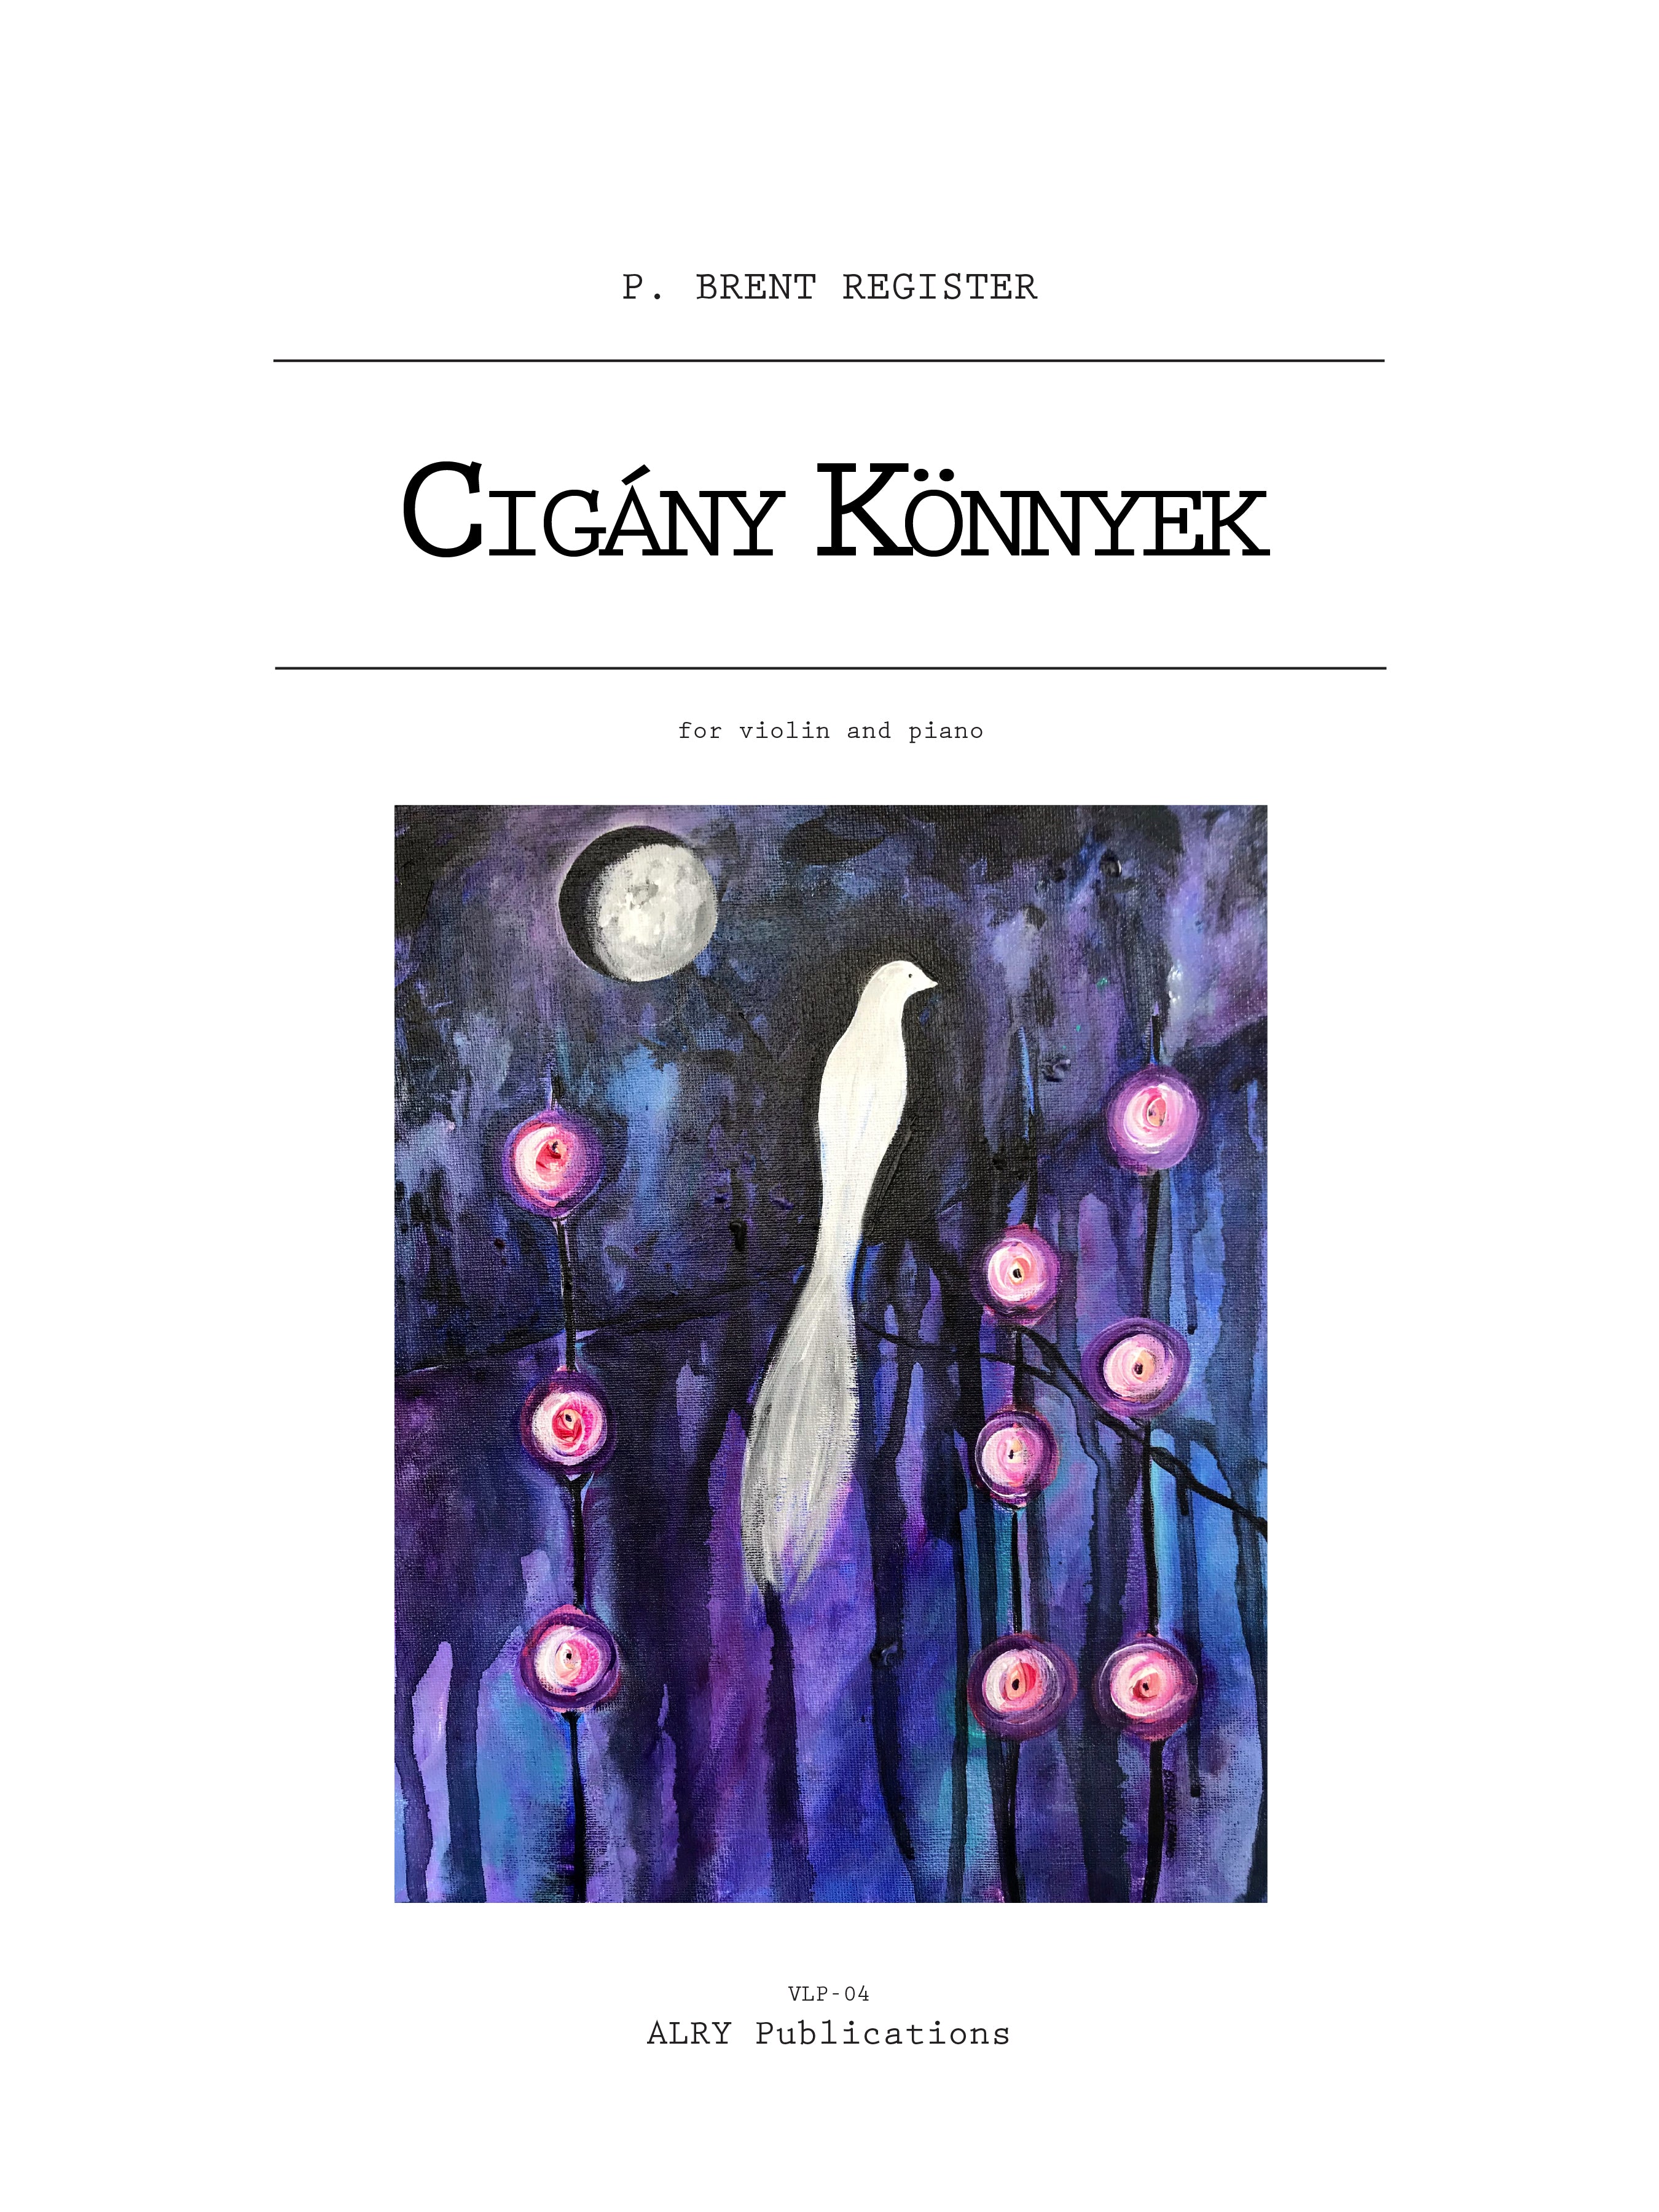 Register - Cigany Konnyek (Gypsy Tears) for Violin and - VLP04 | United Music and Media Publishers